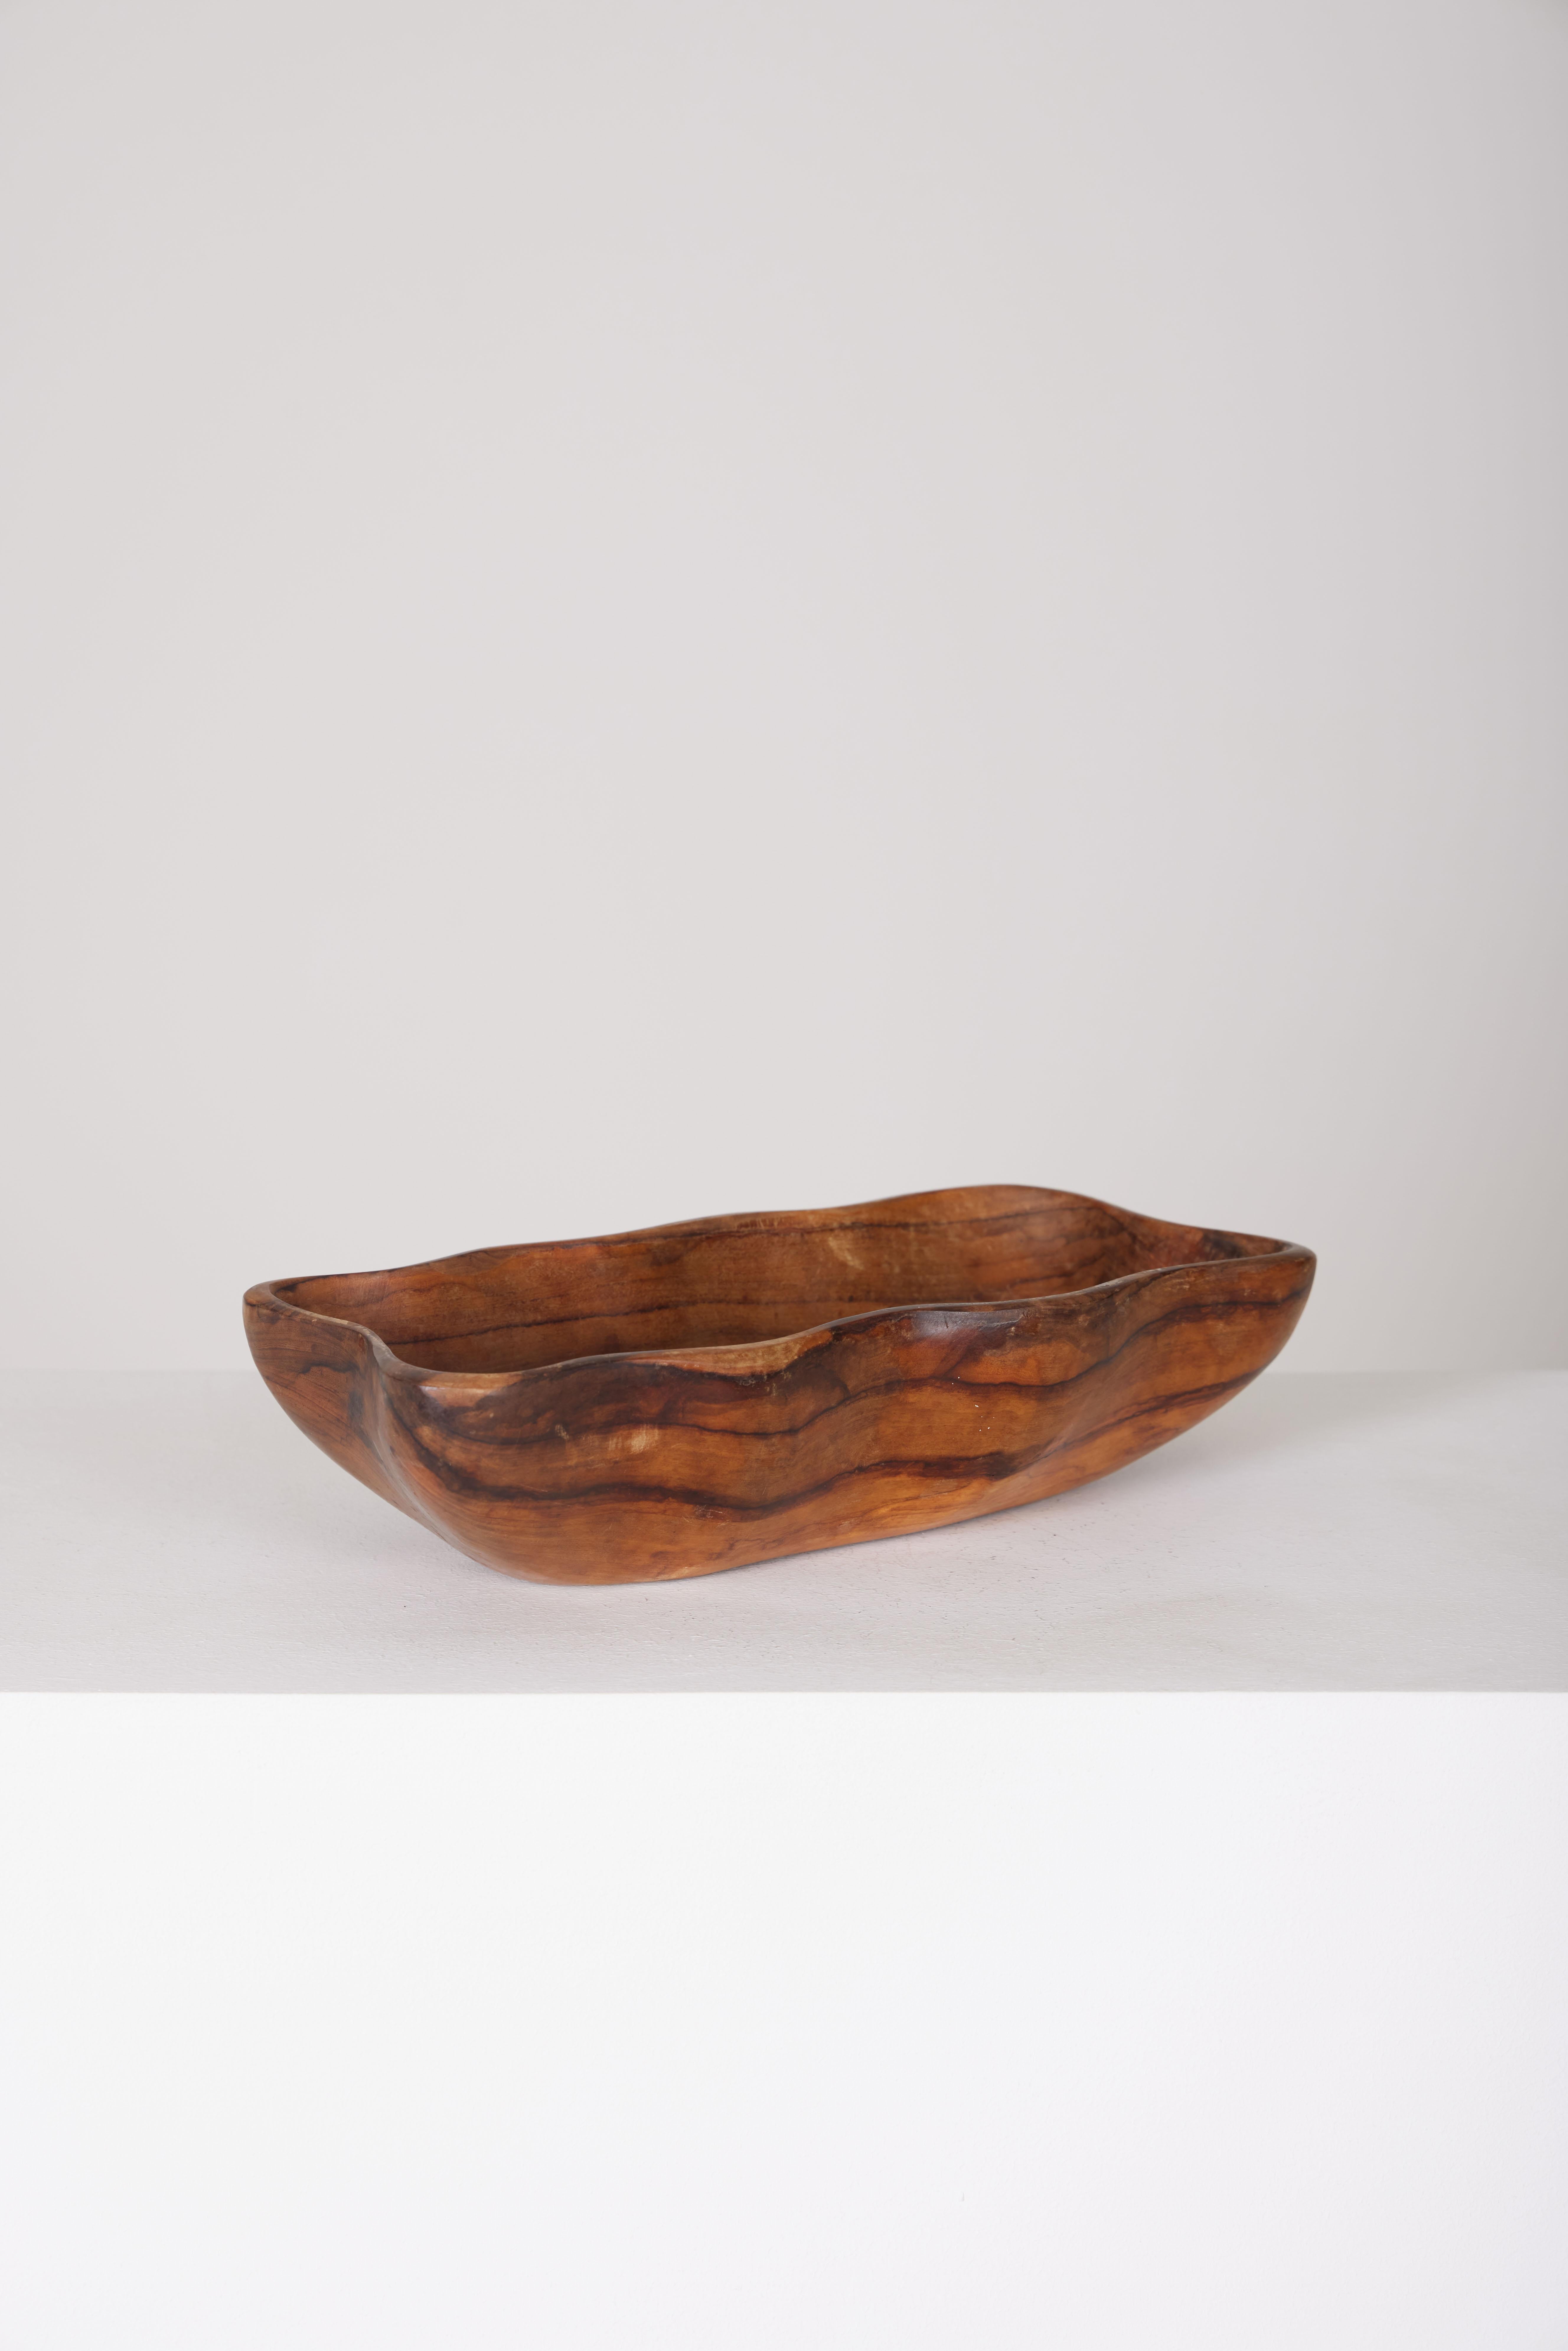 Freeform olive wood bowl
LP1426